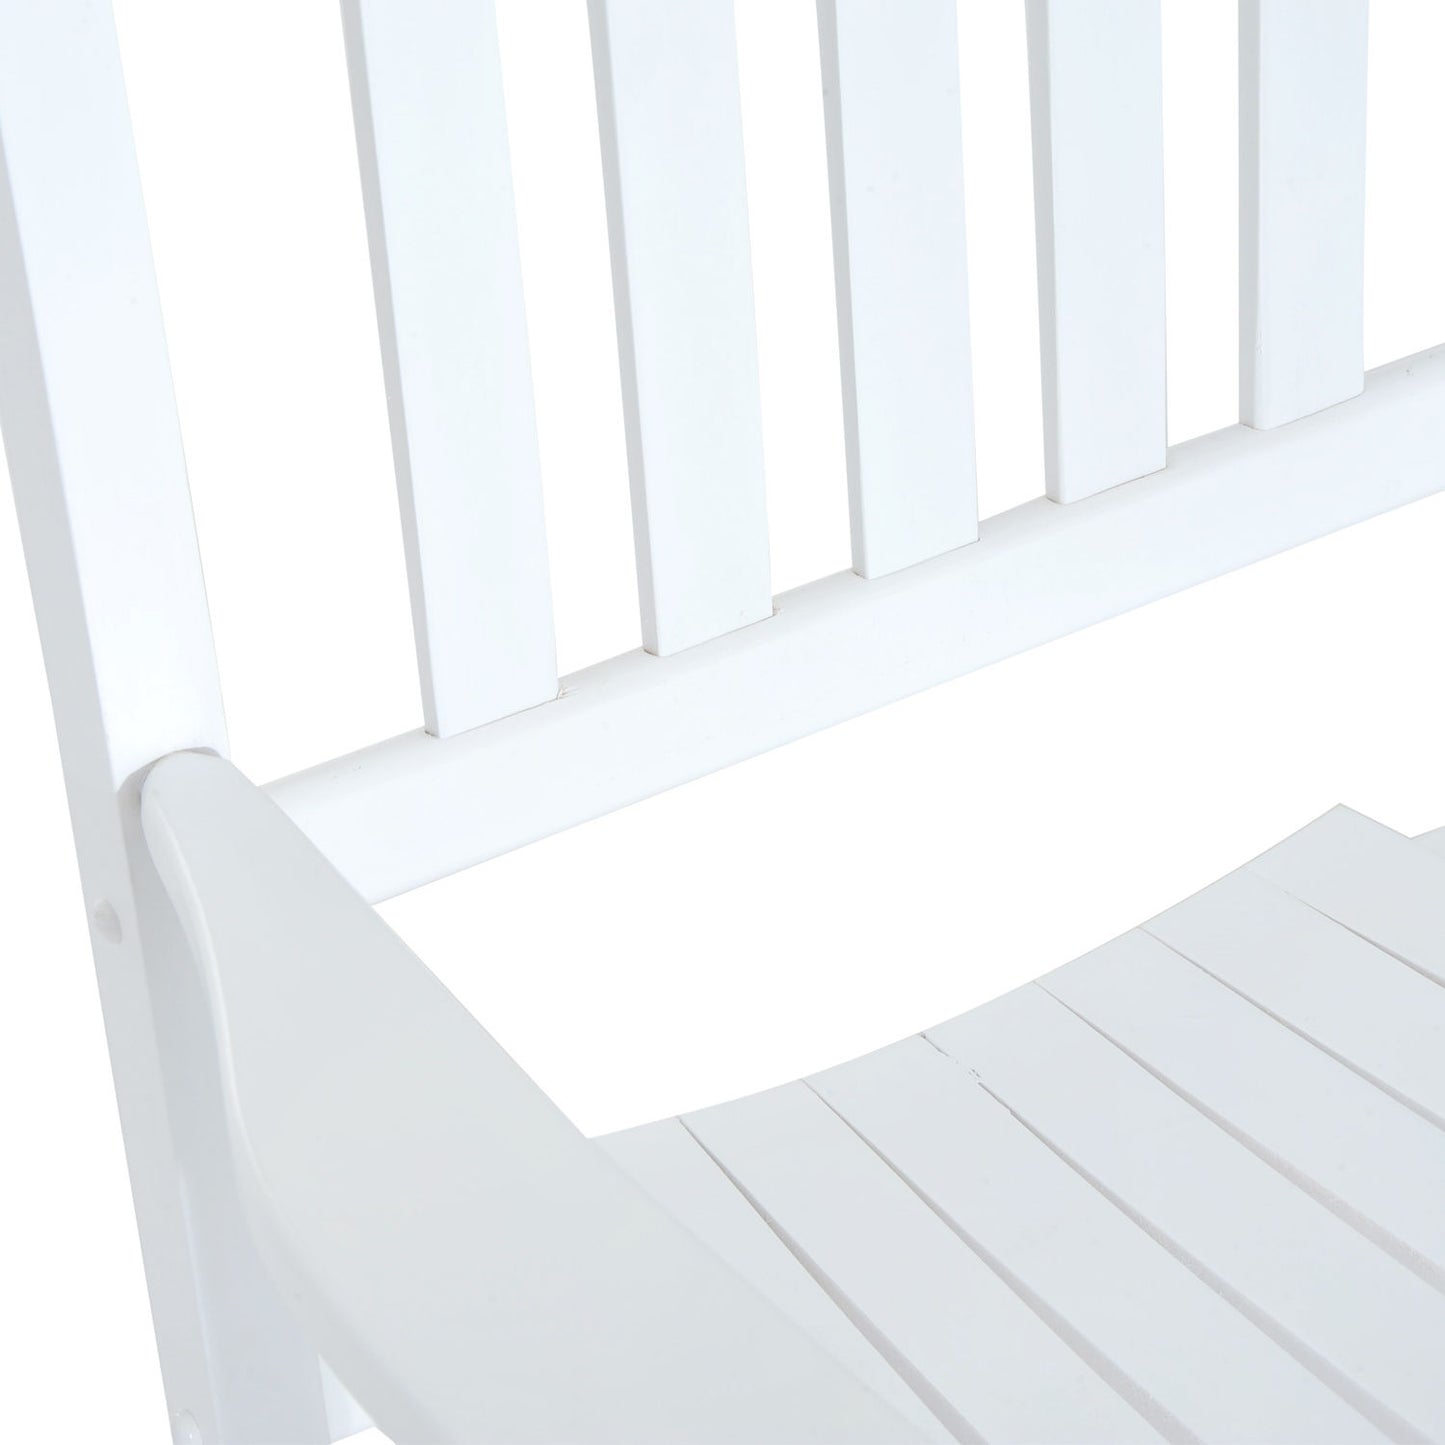 Nancy's Annex Lake Rocking Chair - White - Wood - 27.16 cm x 33.85 cm x 45.27 cm